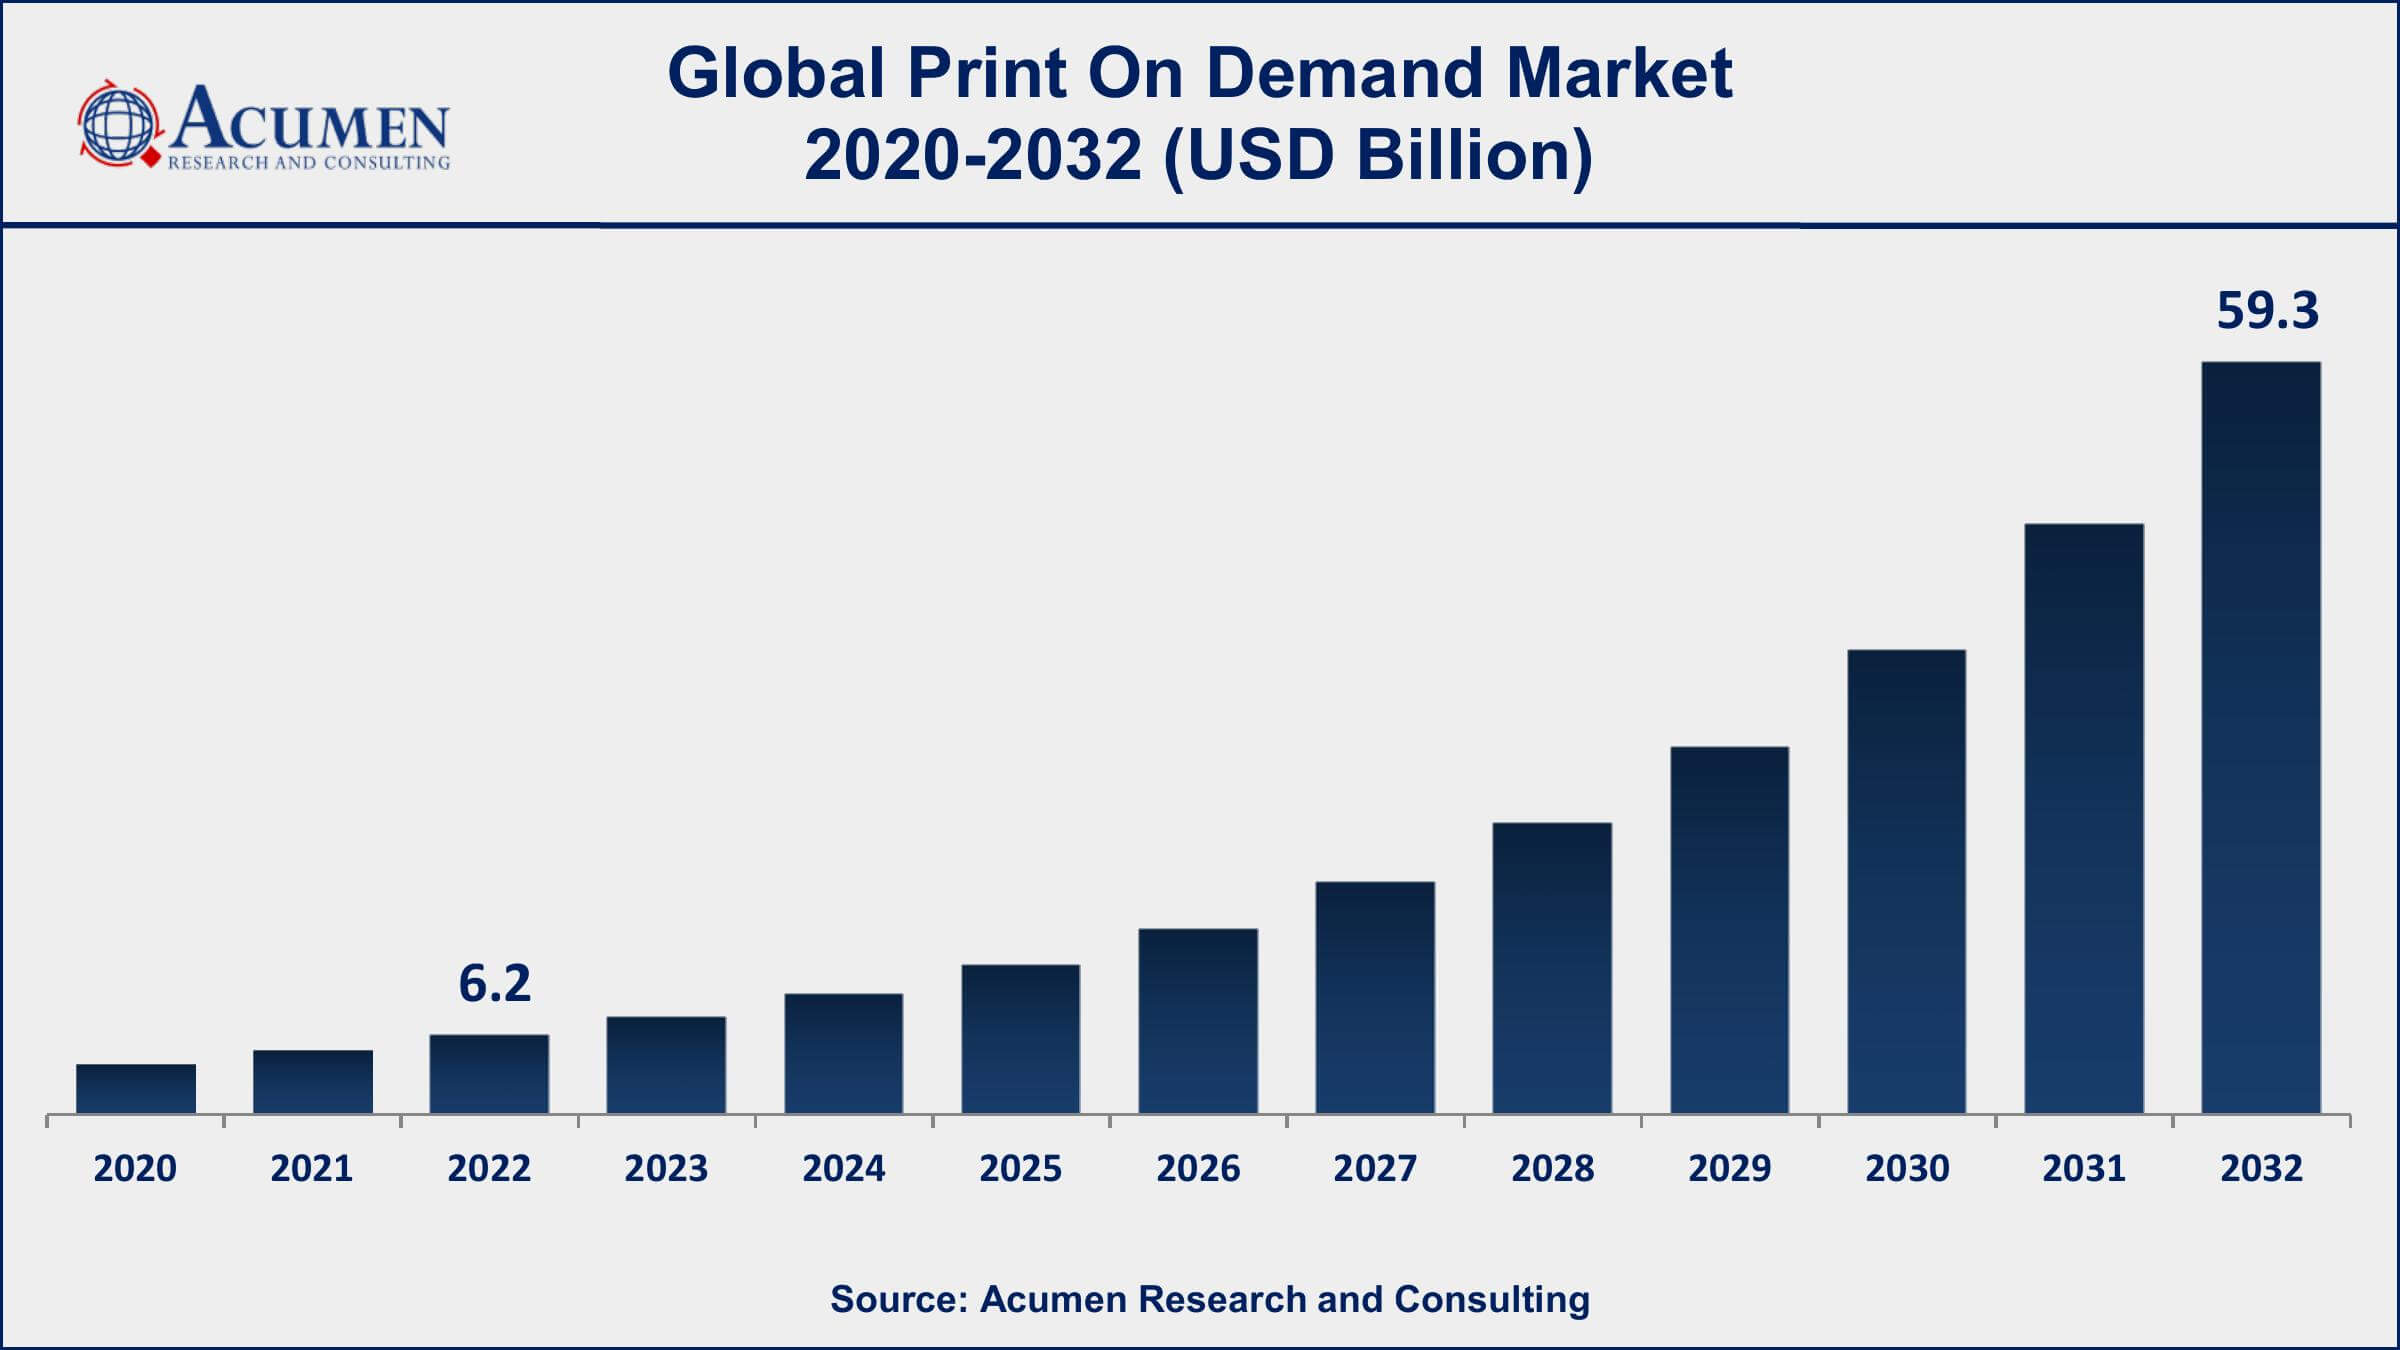 Print on Demand Market Dynamics